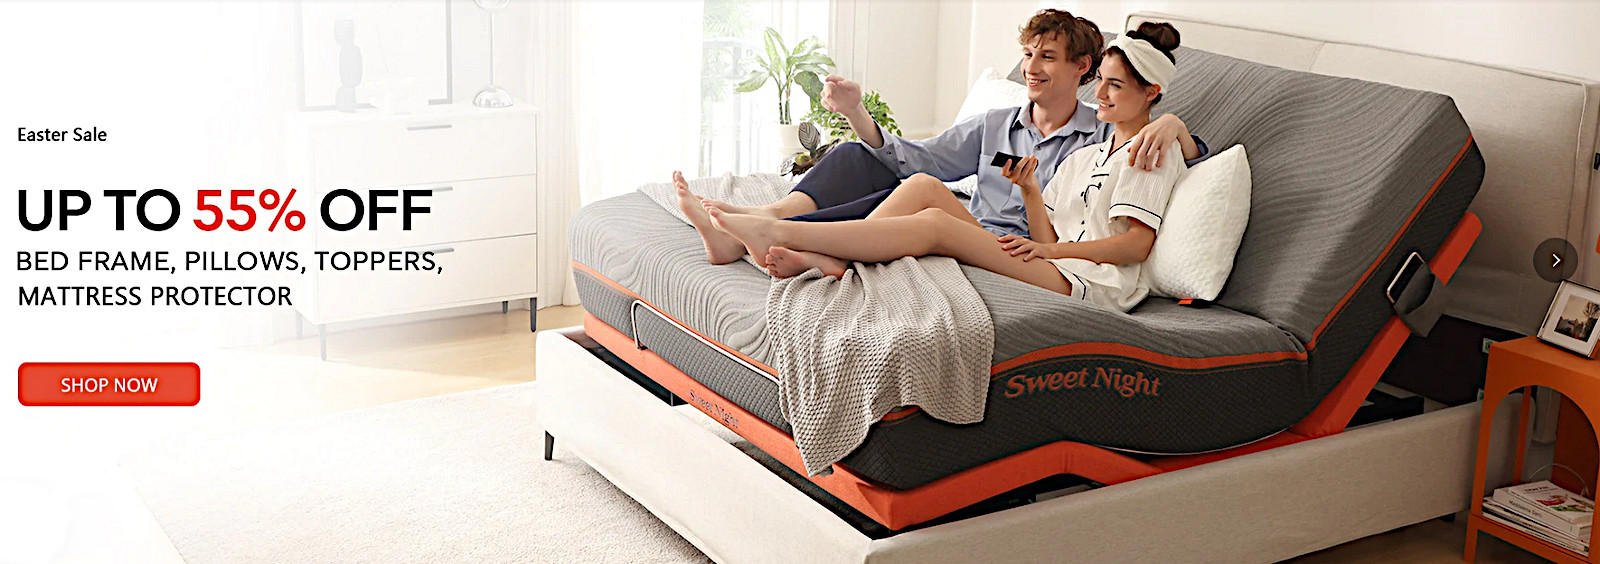 bed frame pillow topper mattress protector deal